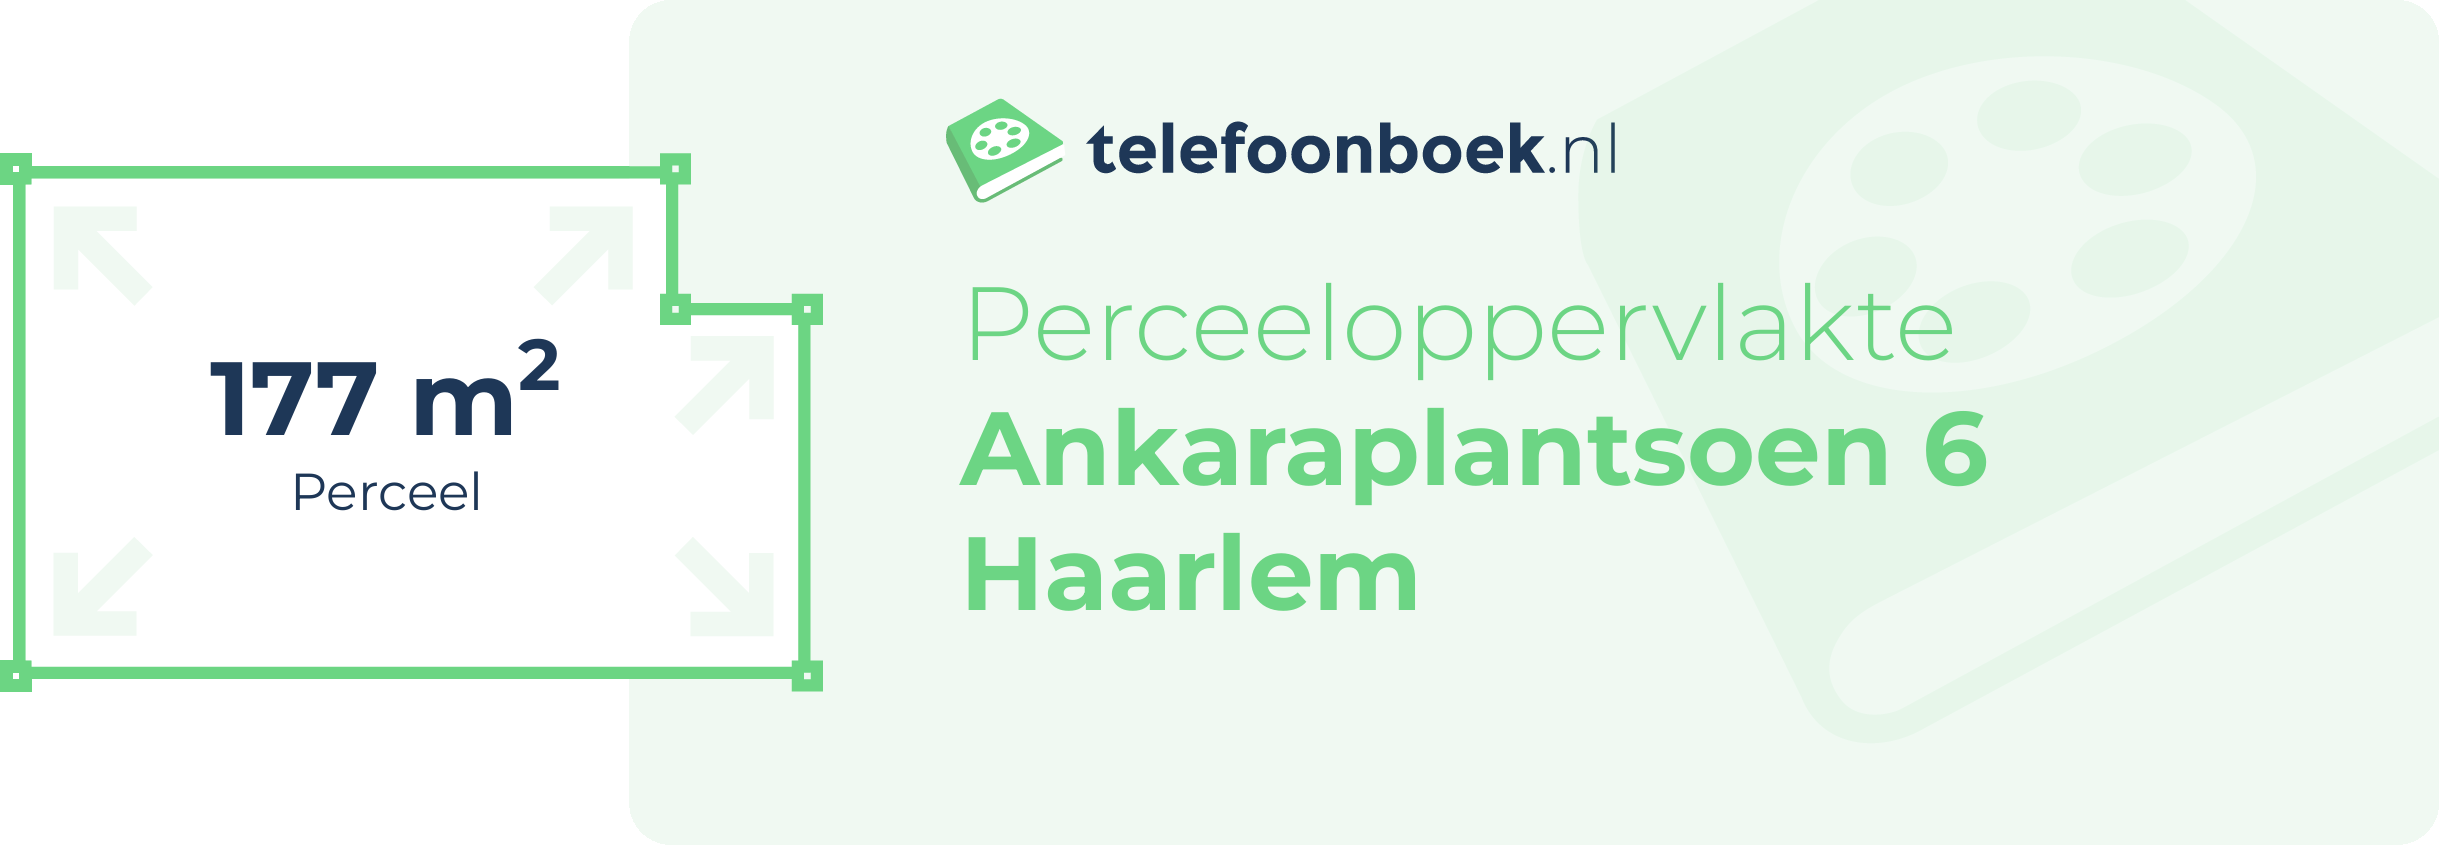 Perceeloppervlakte Ankaraplantsoen 6 Haarlem